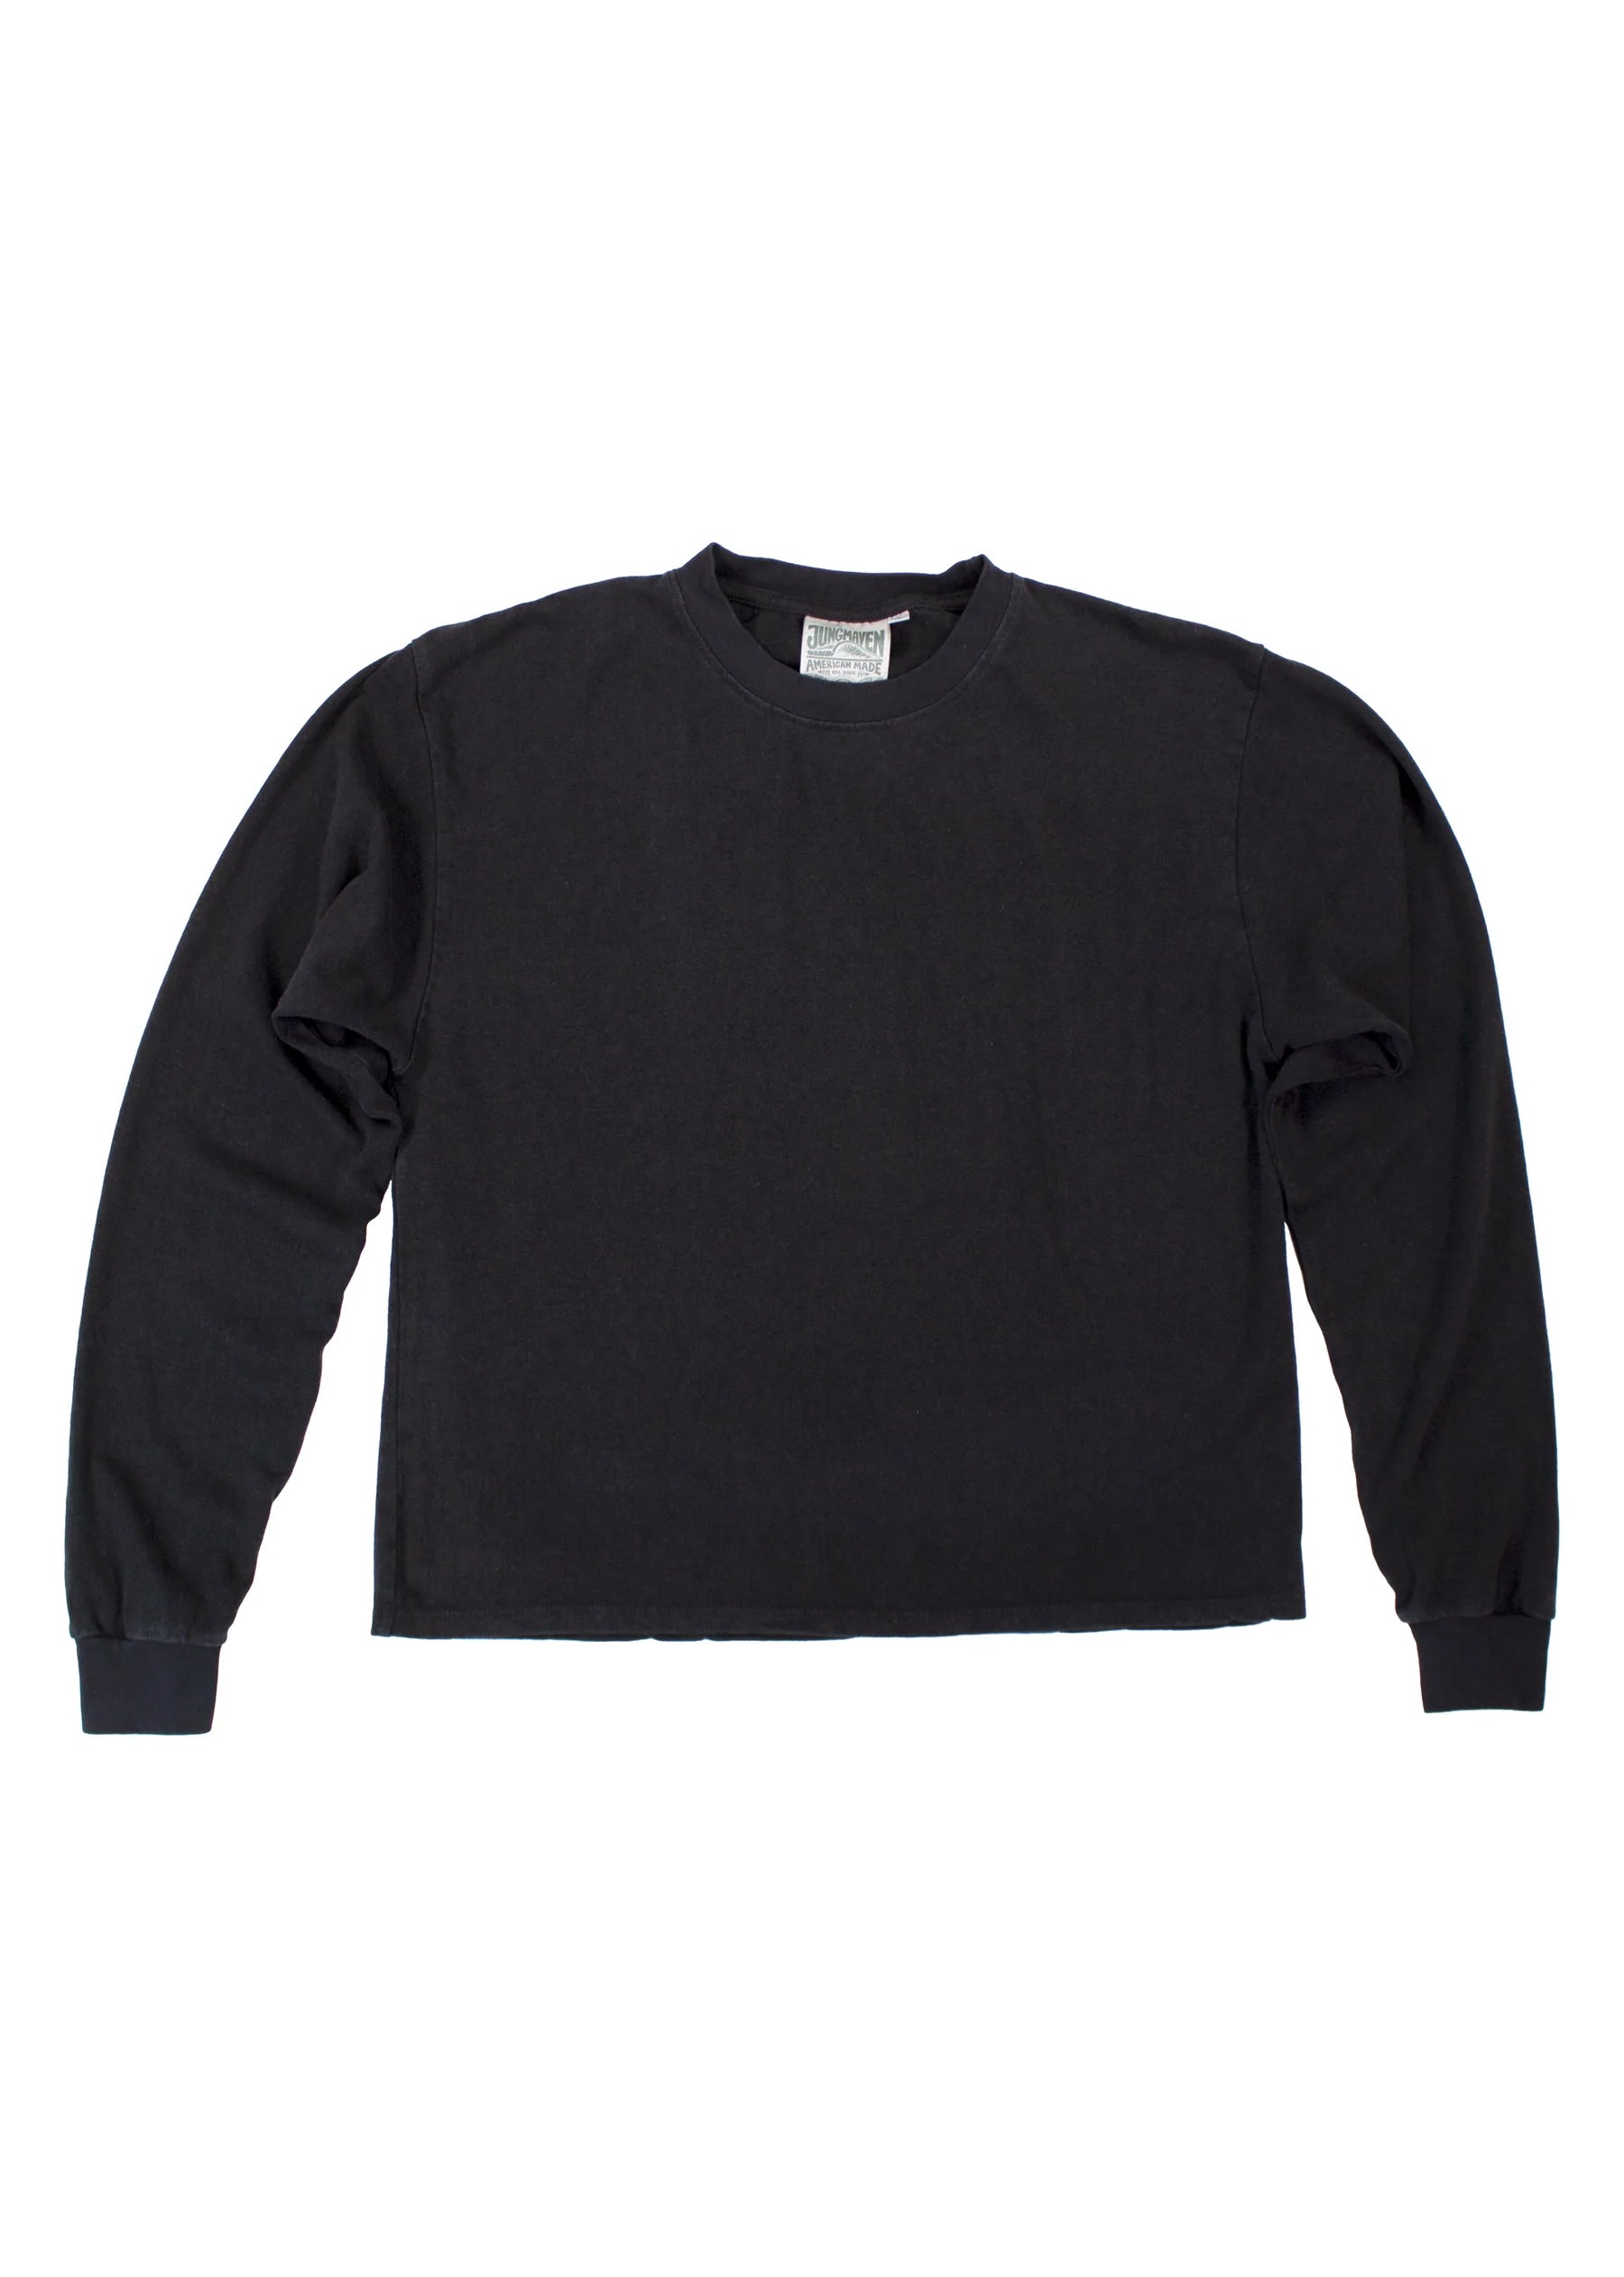 Jungmaven - Tatoosh Wool / Hemp Cropped Long Sleeve Tee in Black